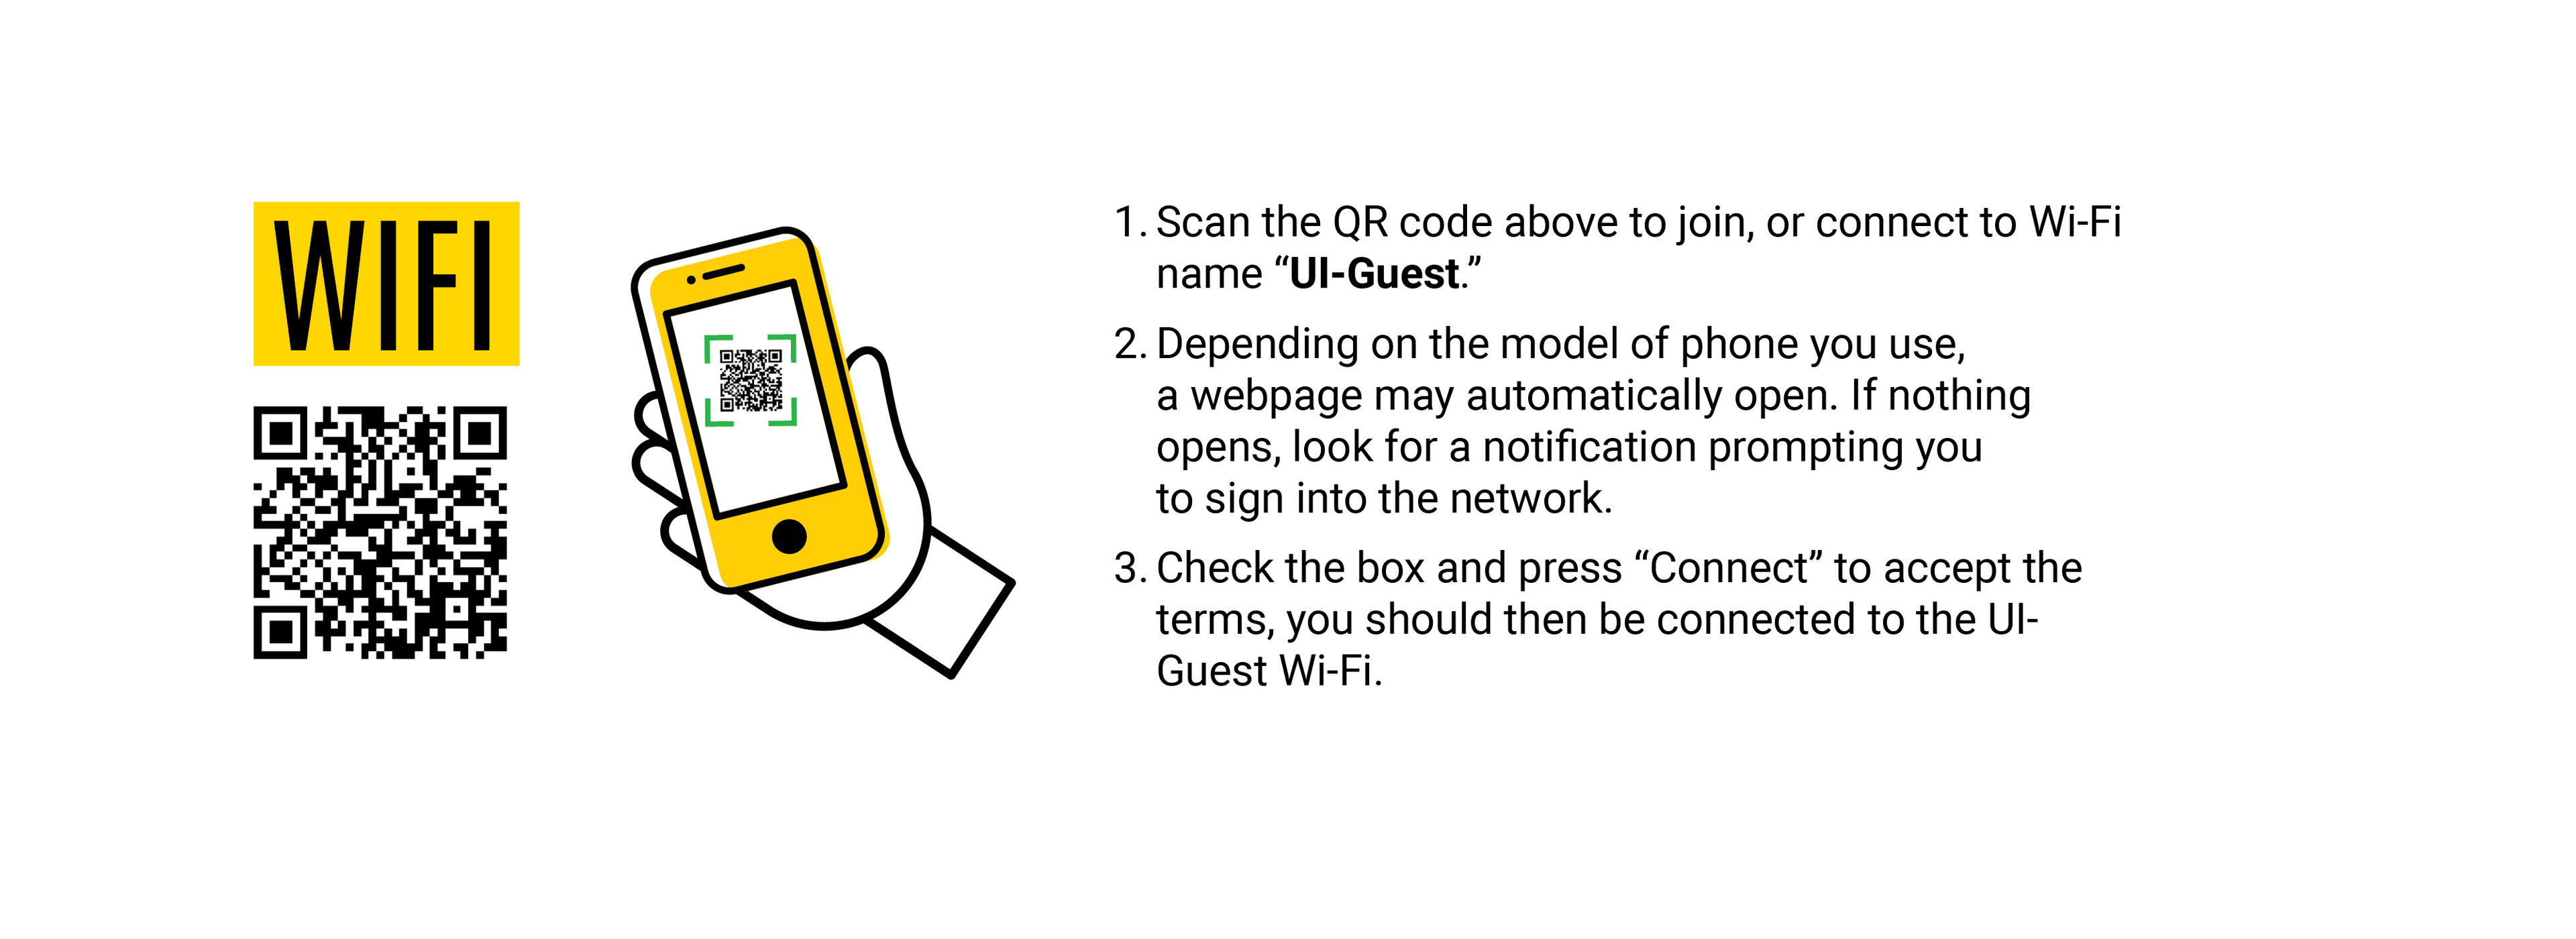 wifi instructions